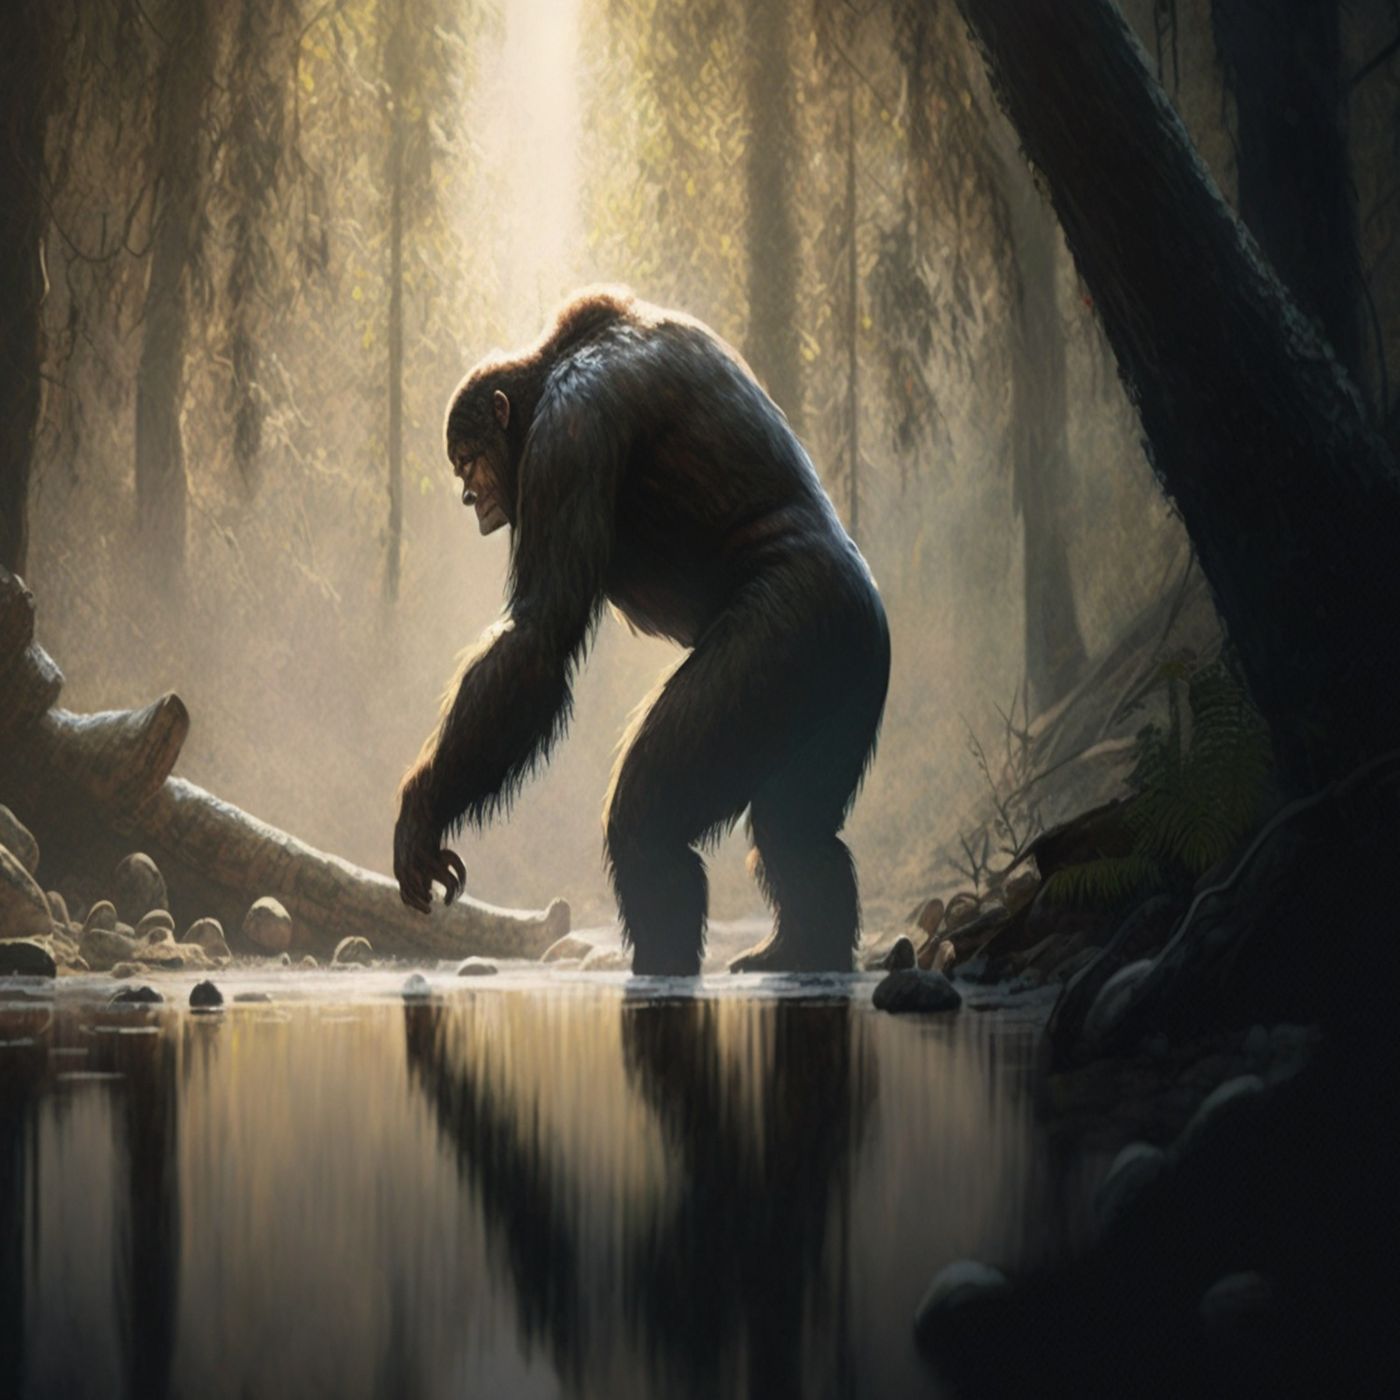 Bigfoot Stood Motionless in the Creek